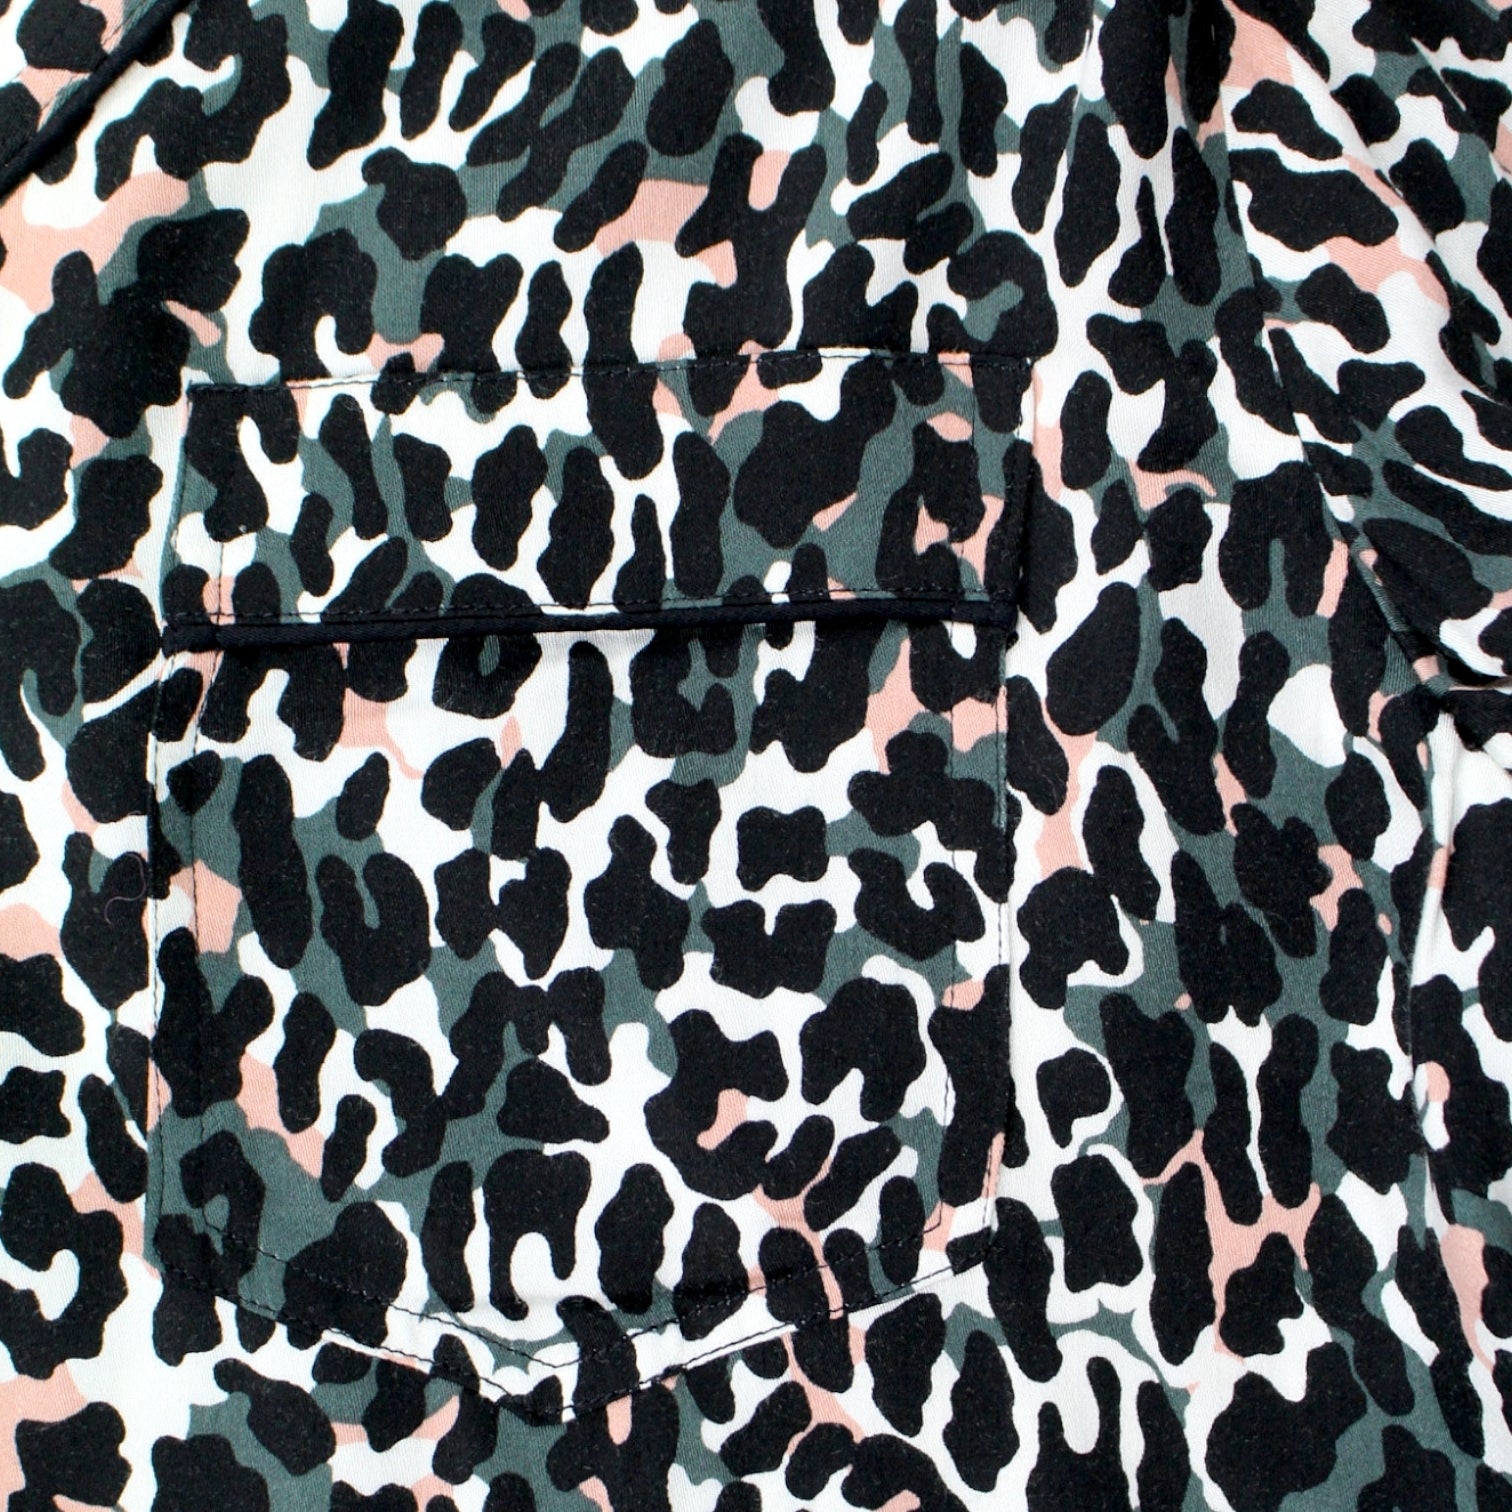 Hush Cream Camo Leopard Printed Shirt